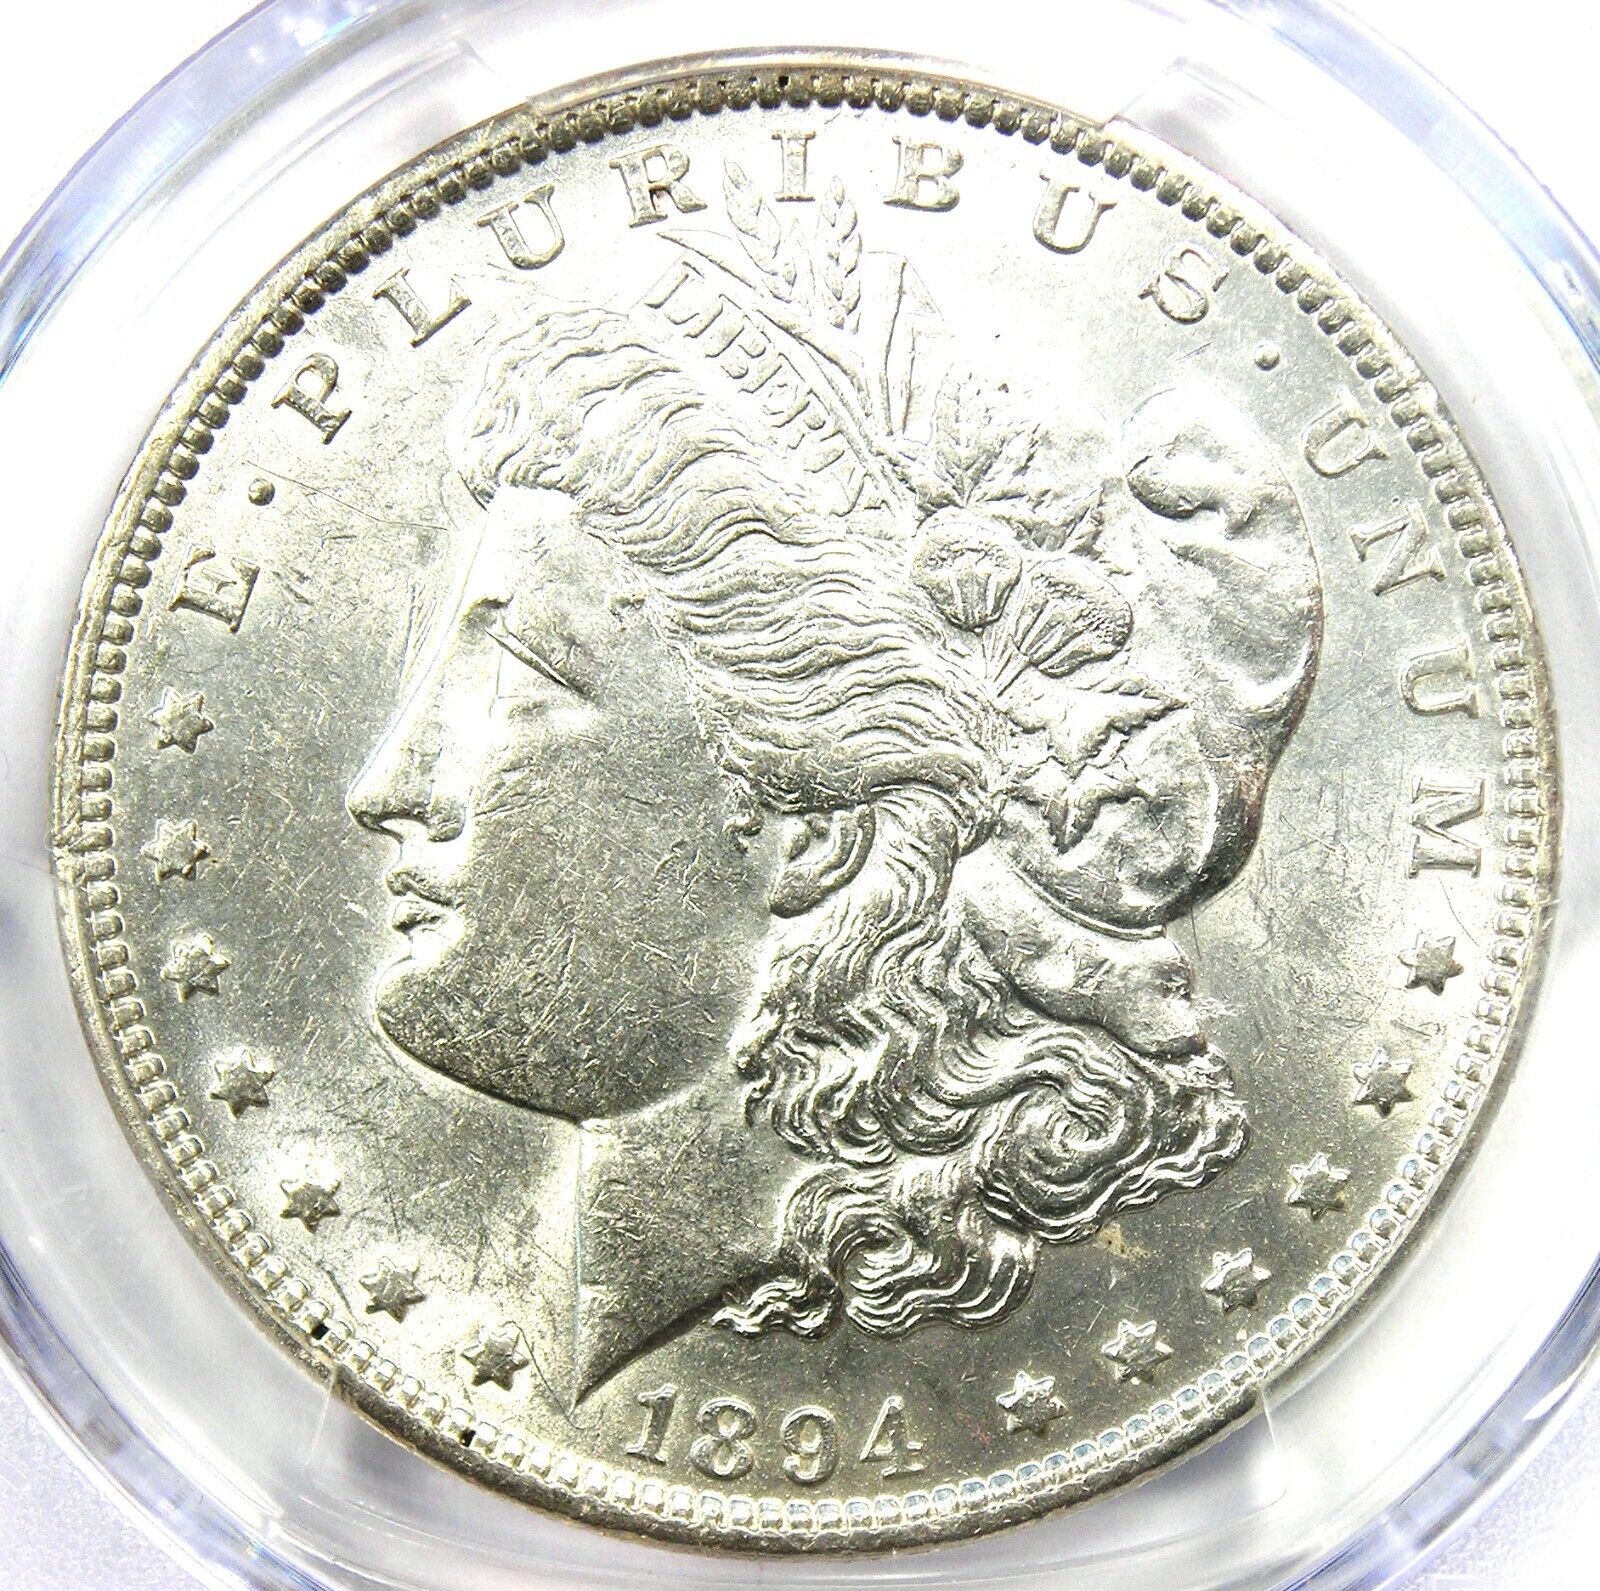 1894-P Morgan Silver Dollar $1 Coin 1894 - Certified PCGS AU53 - Rare Key Date